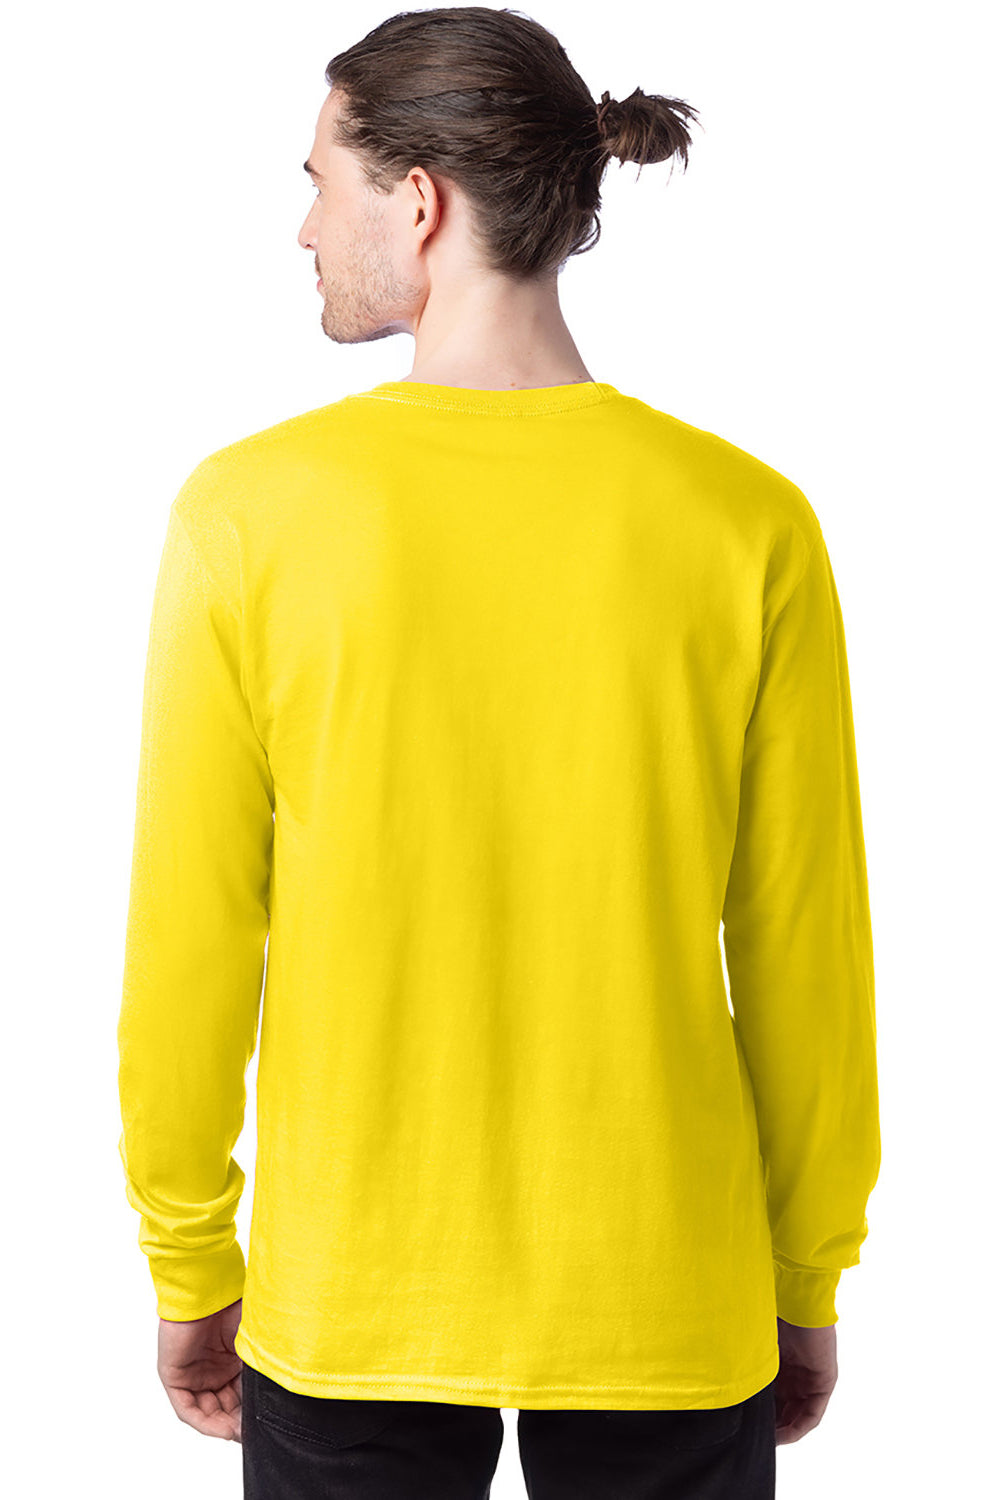 Hanes Men's TAGLESS Comfortsoft Long-Sleeve T-Shirt, Style 5286 